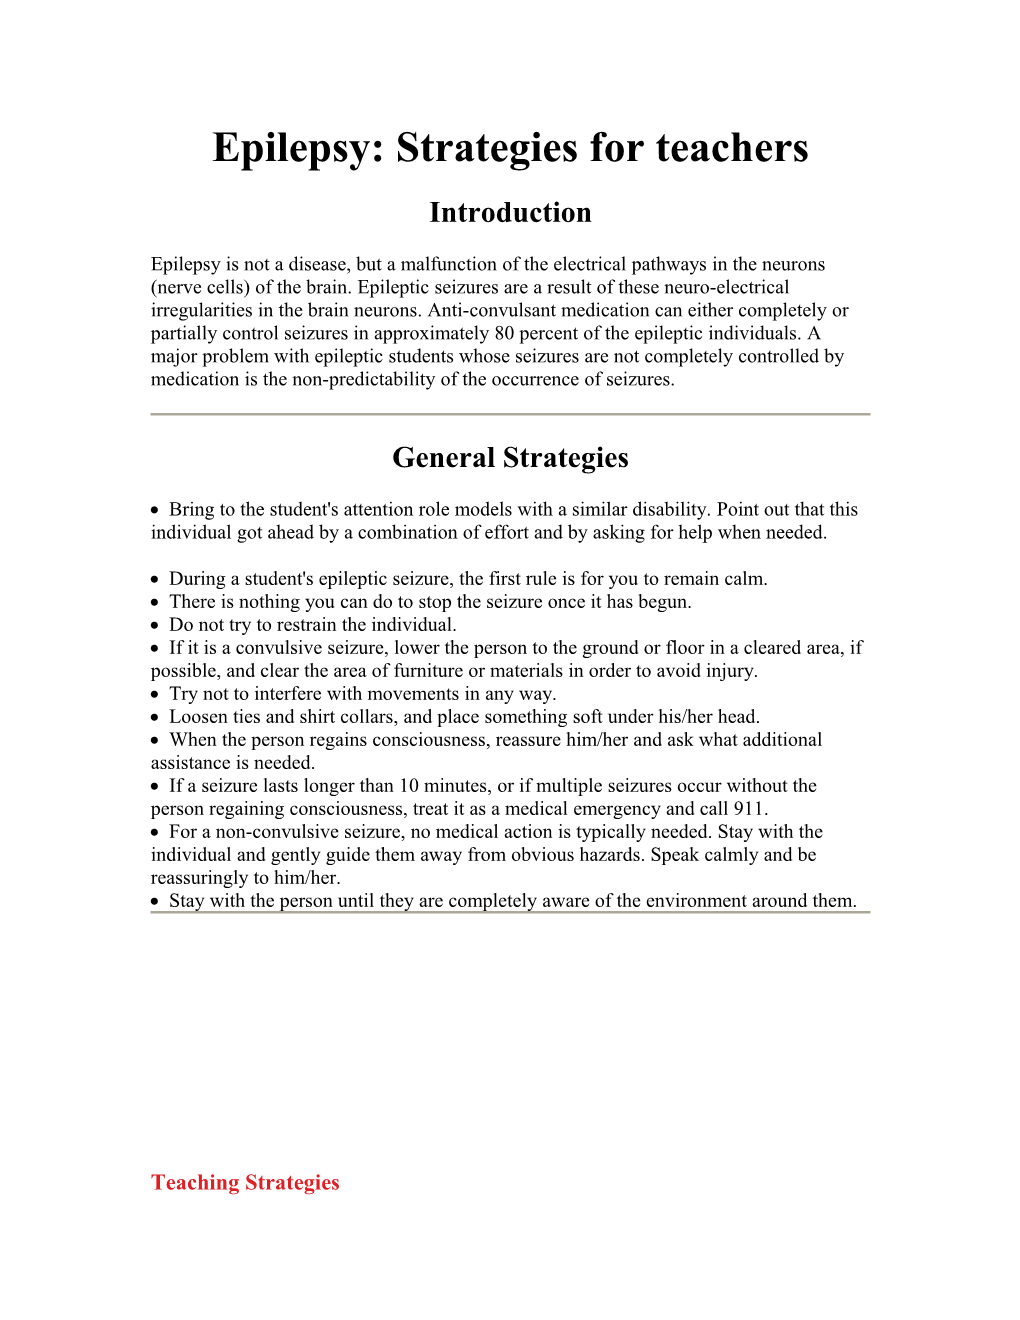 Epilepsy: Strategies for Teachers